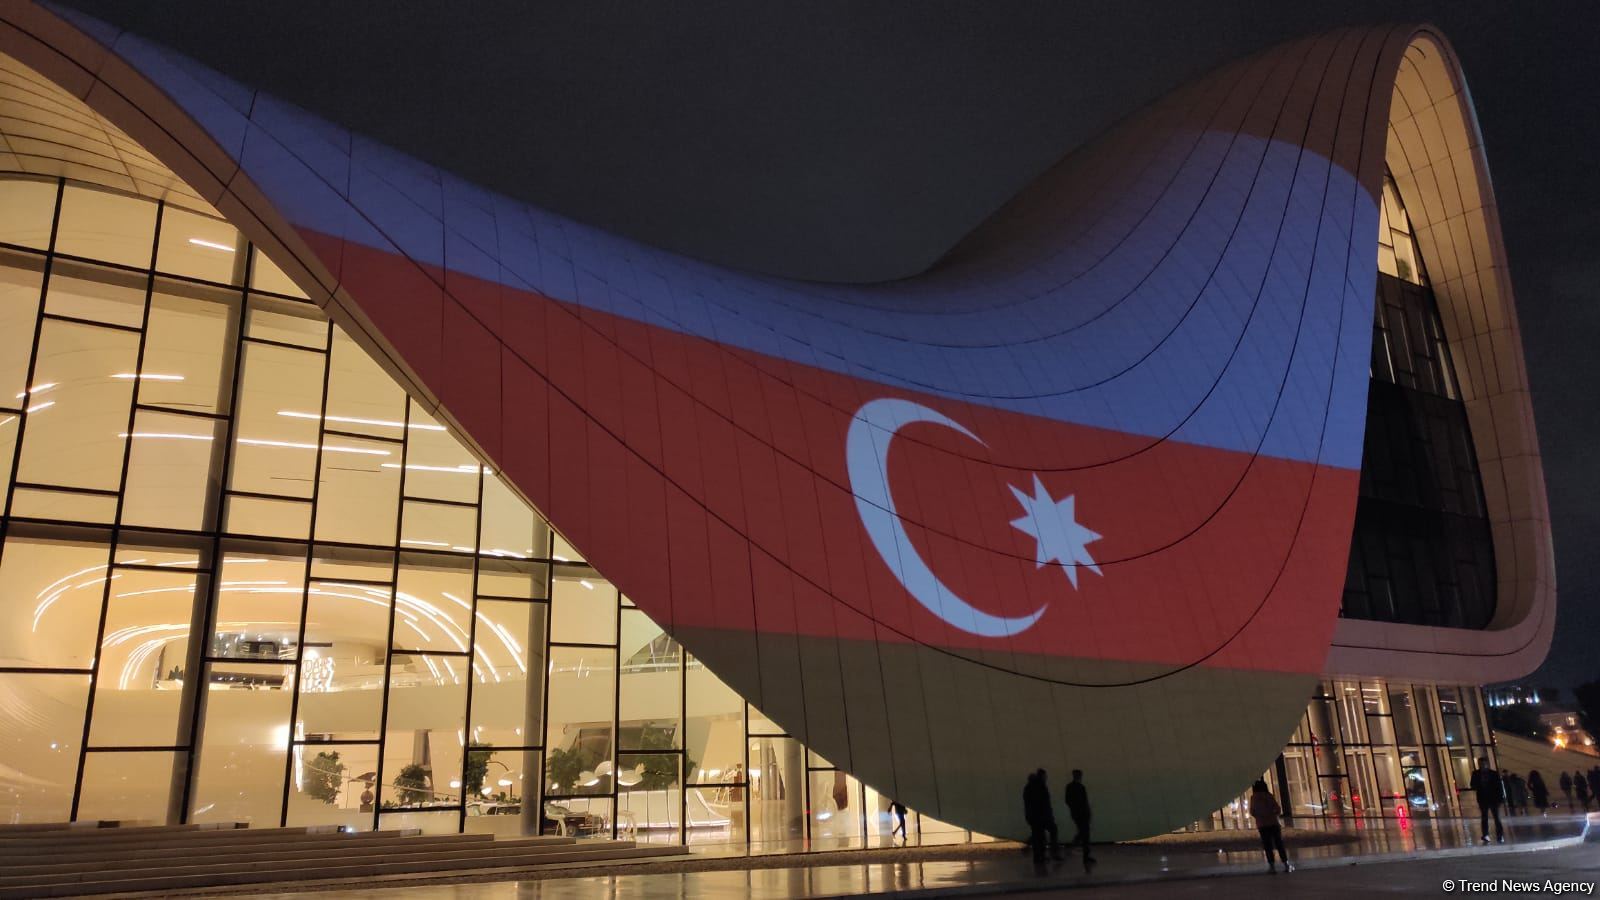 Building of Baku's Heydar Aliyev Center painted in colors of Turkish flag